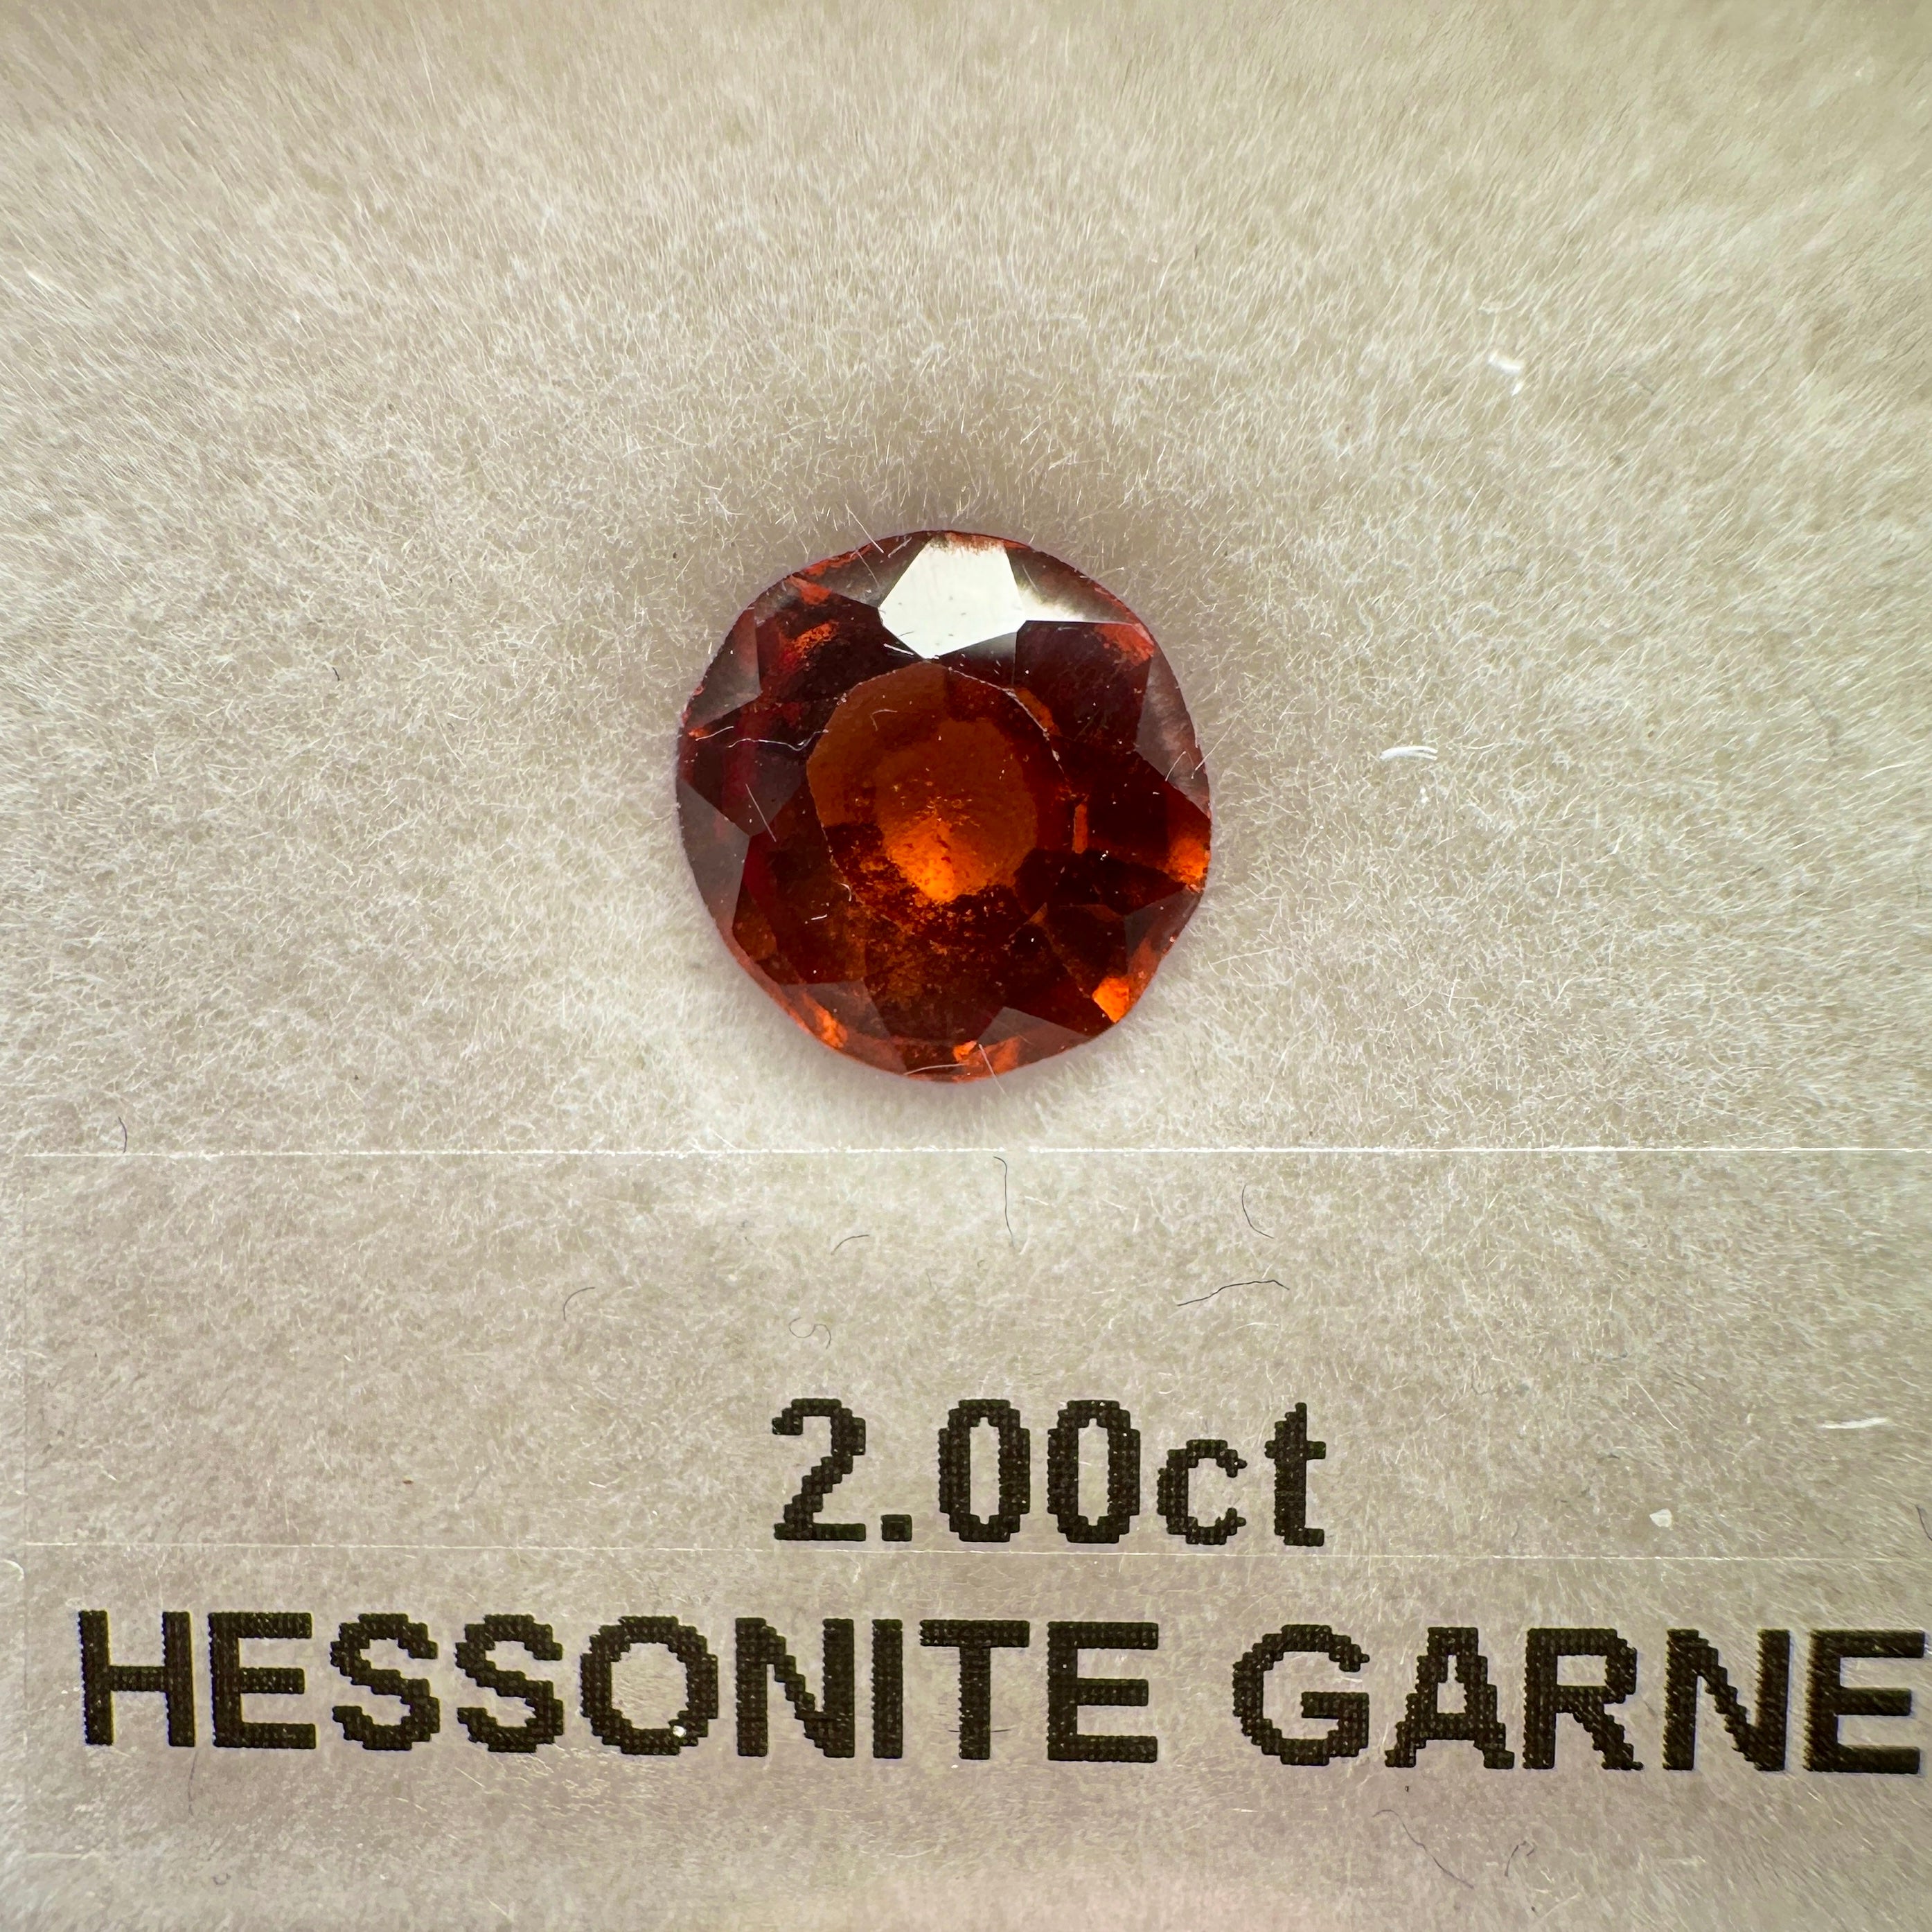 2.00ct Hessonite Garnet, Untreated Unheated, native cut